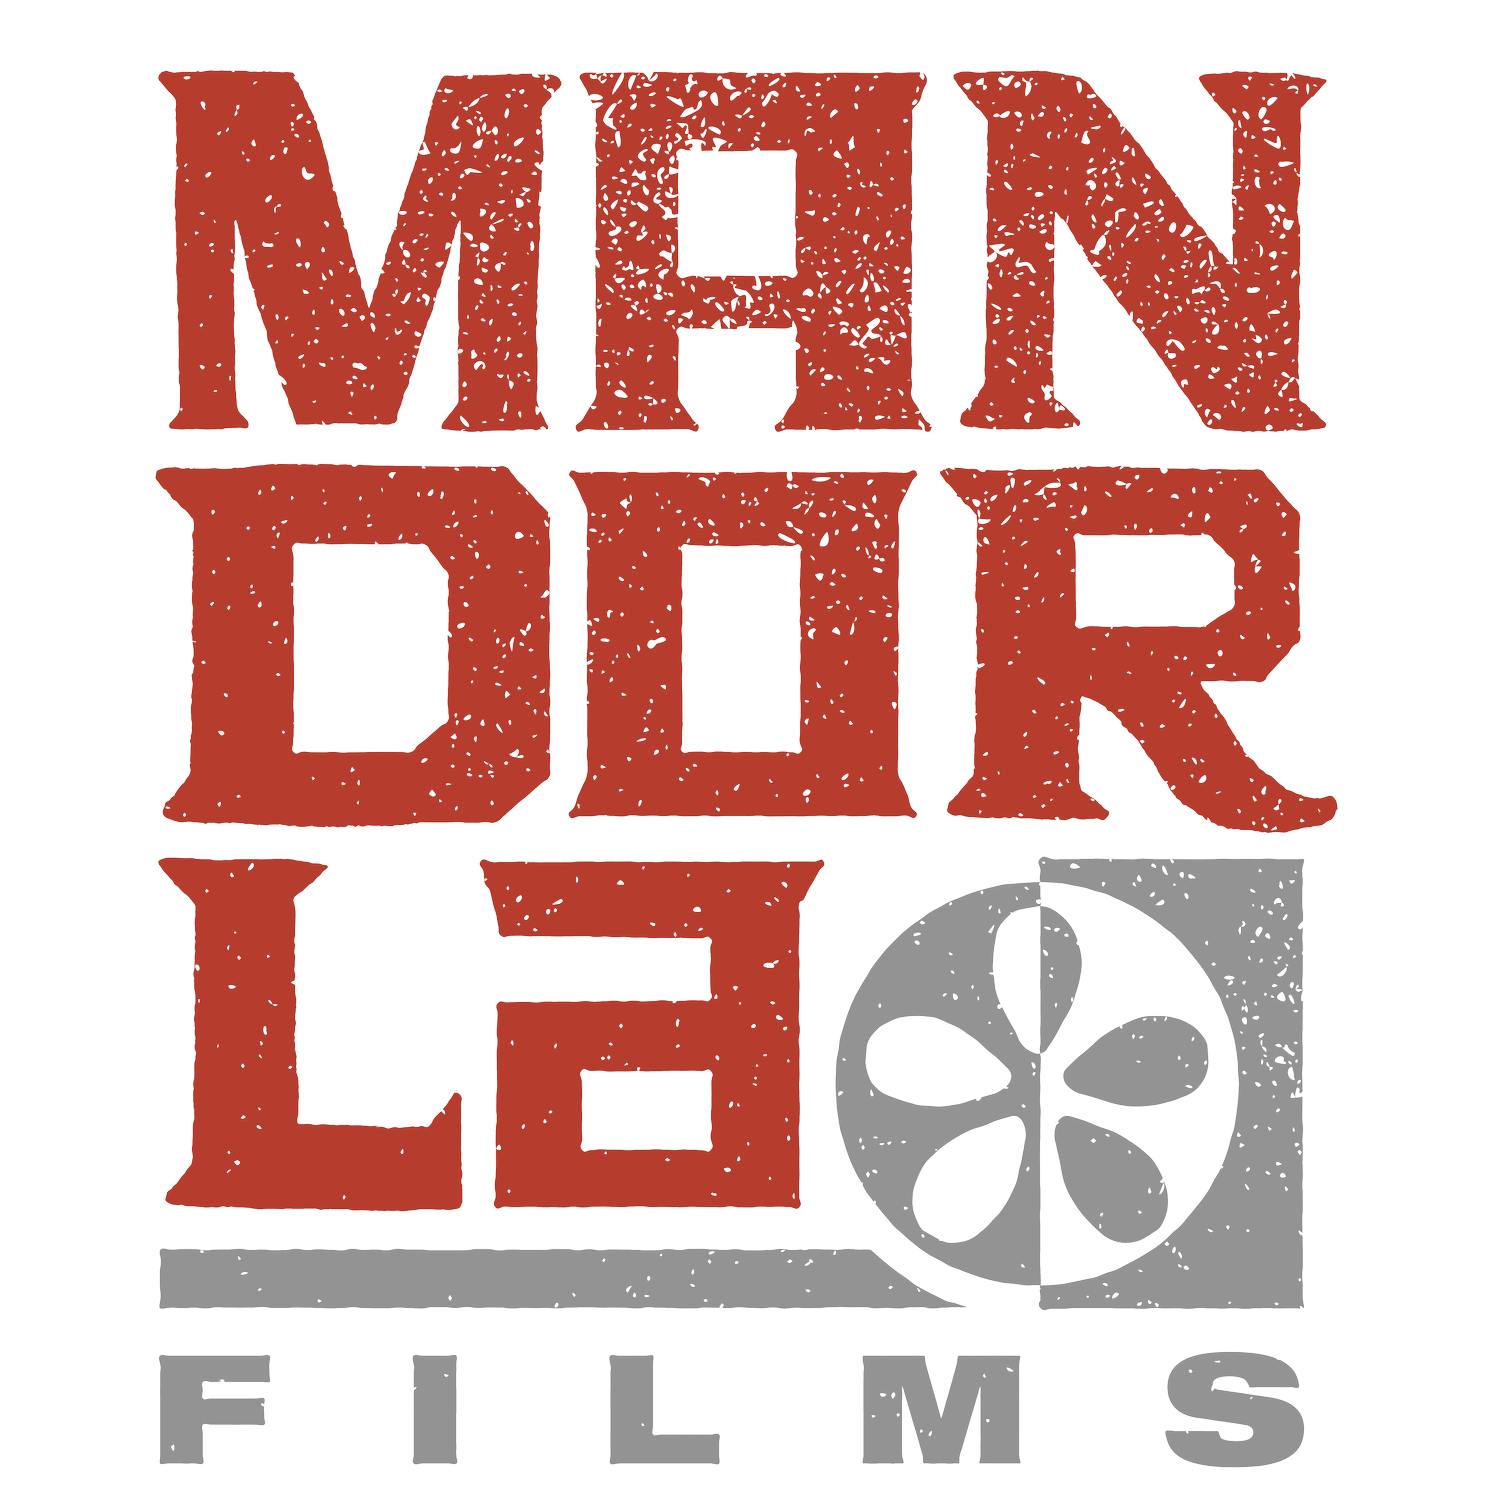 Mandorla Films